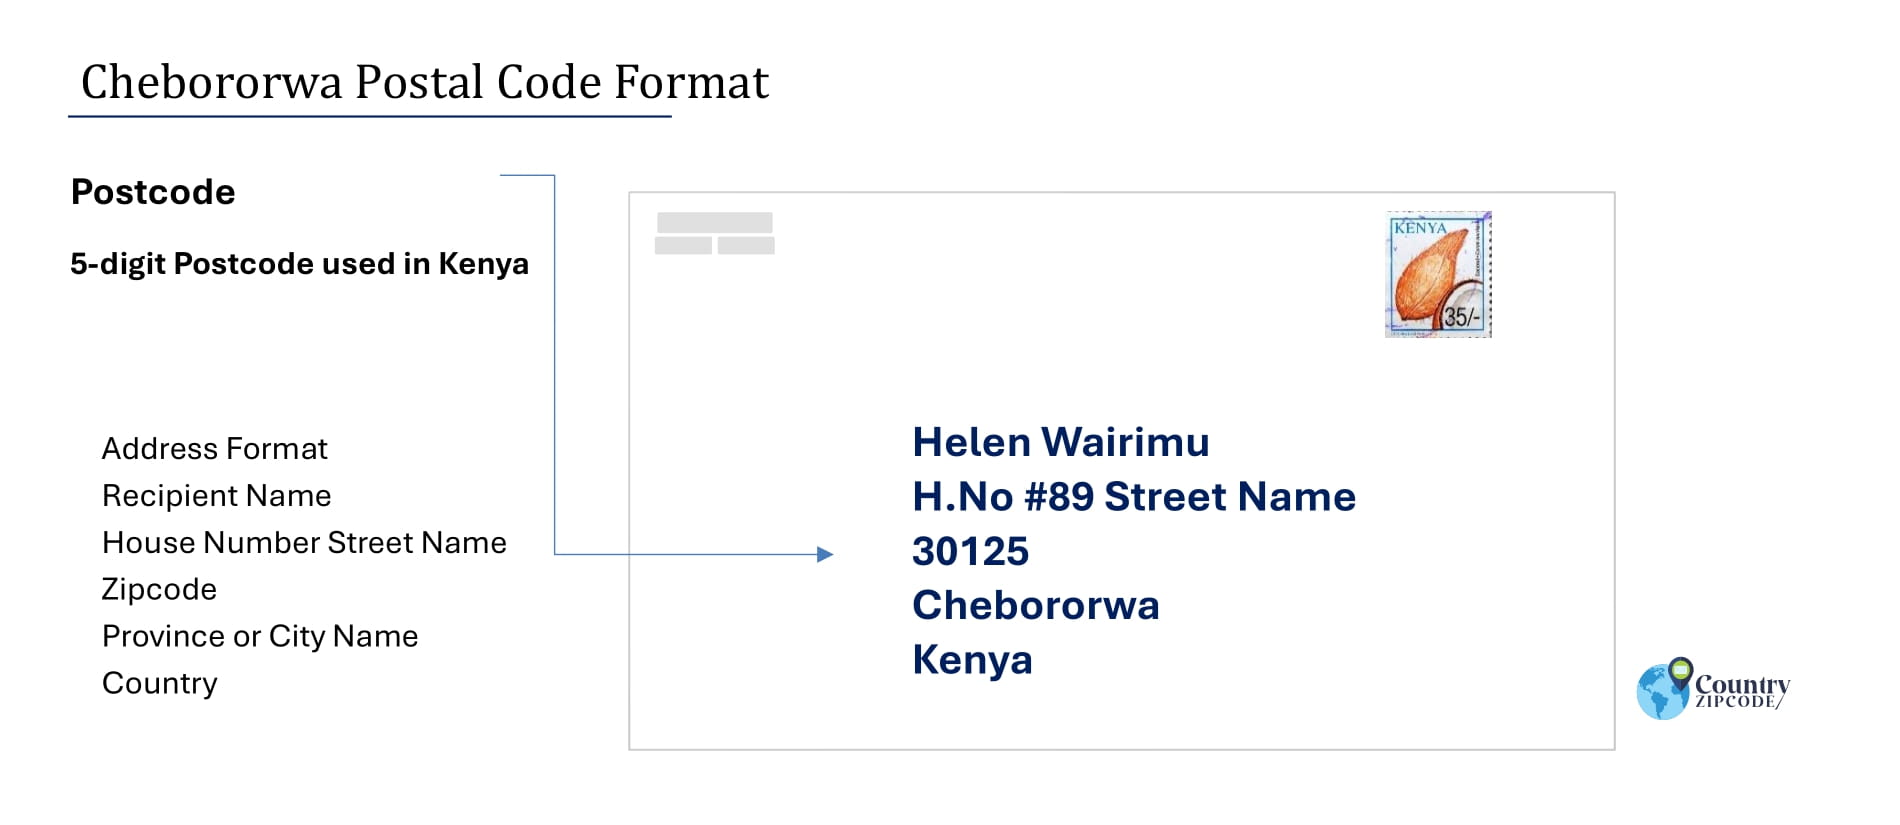 Example of Chebororwa Address and postal code format